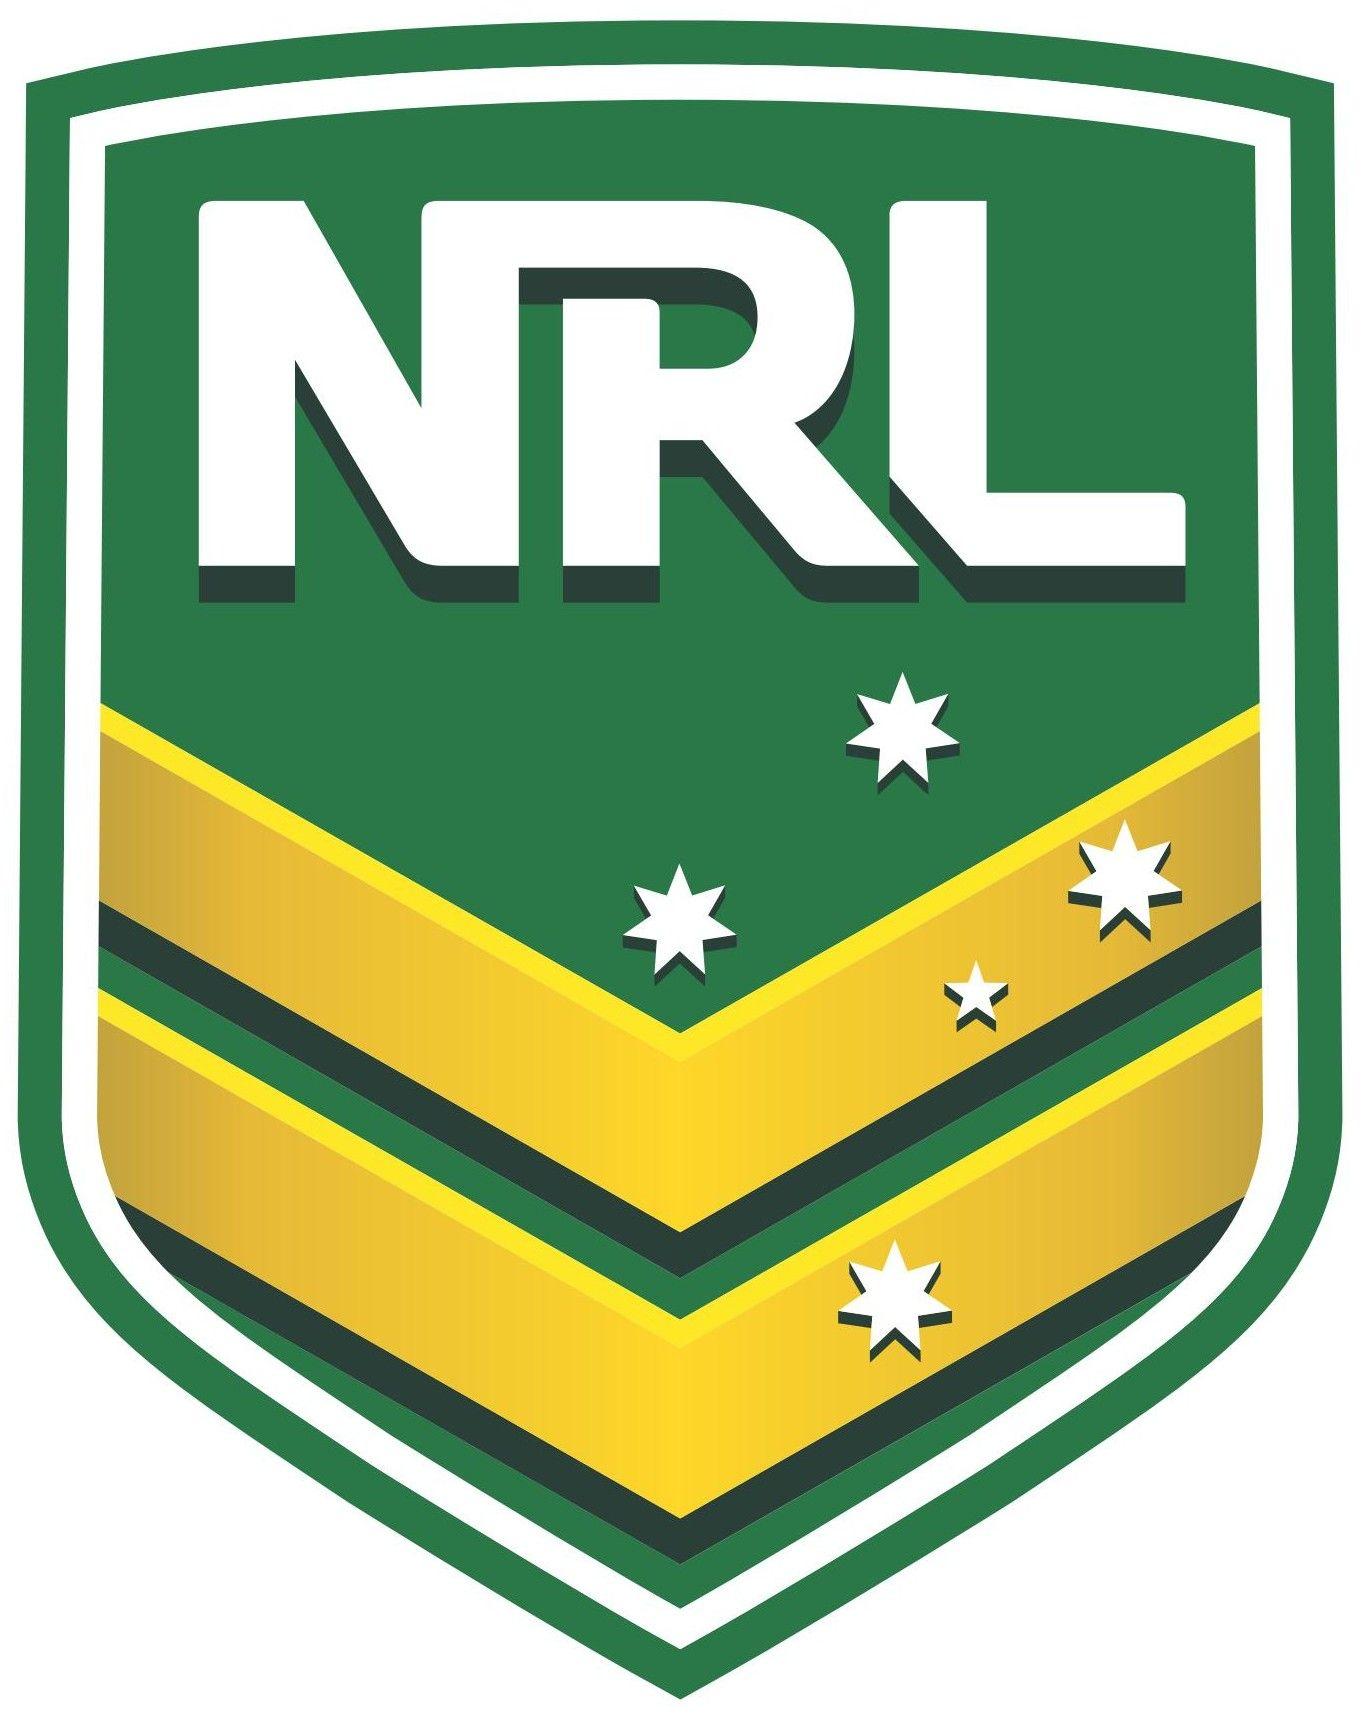 NRL Logo - NRL Australia (National Rugby League) | Logos - Other Sports ...